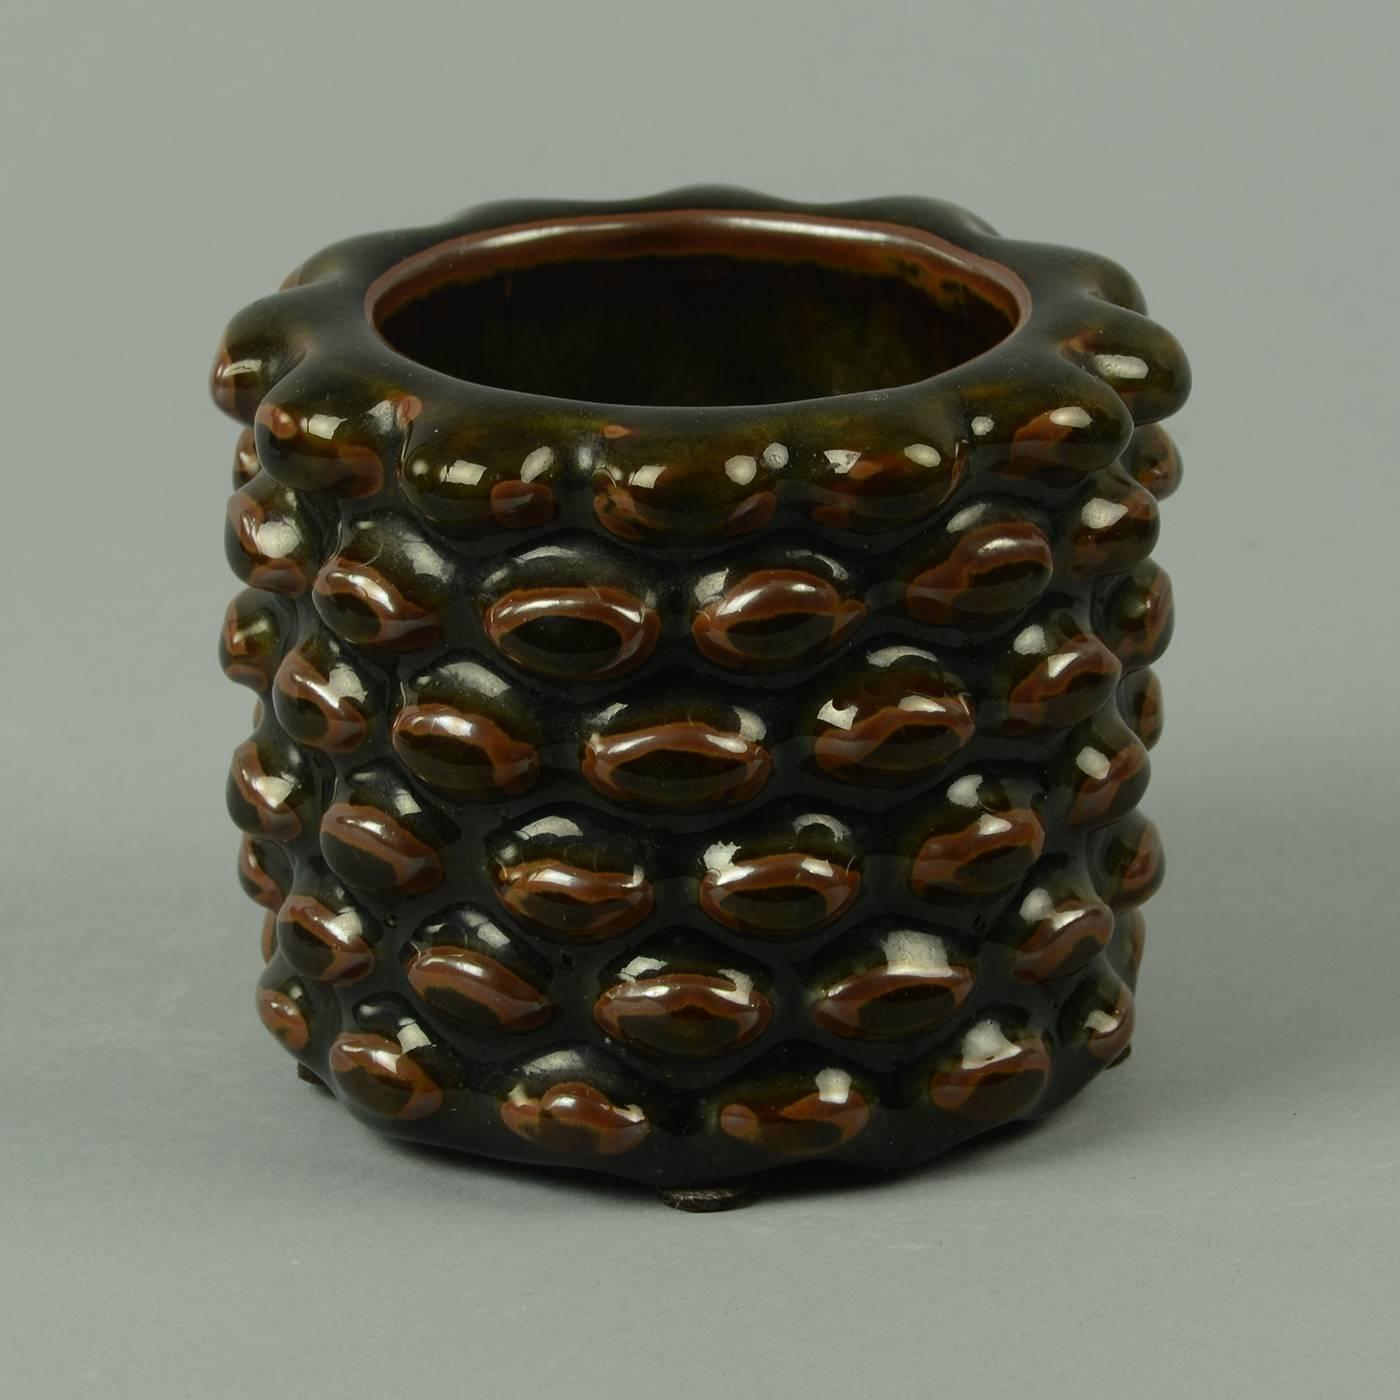 Axel Salto for Royal Copenhagen, Denmark

Stoneware budding vase with tenmoku glaze in glossy black and matte reddish brown, 1937.
Measure: Height 3 1/2